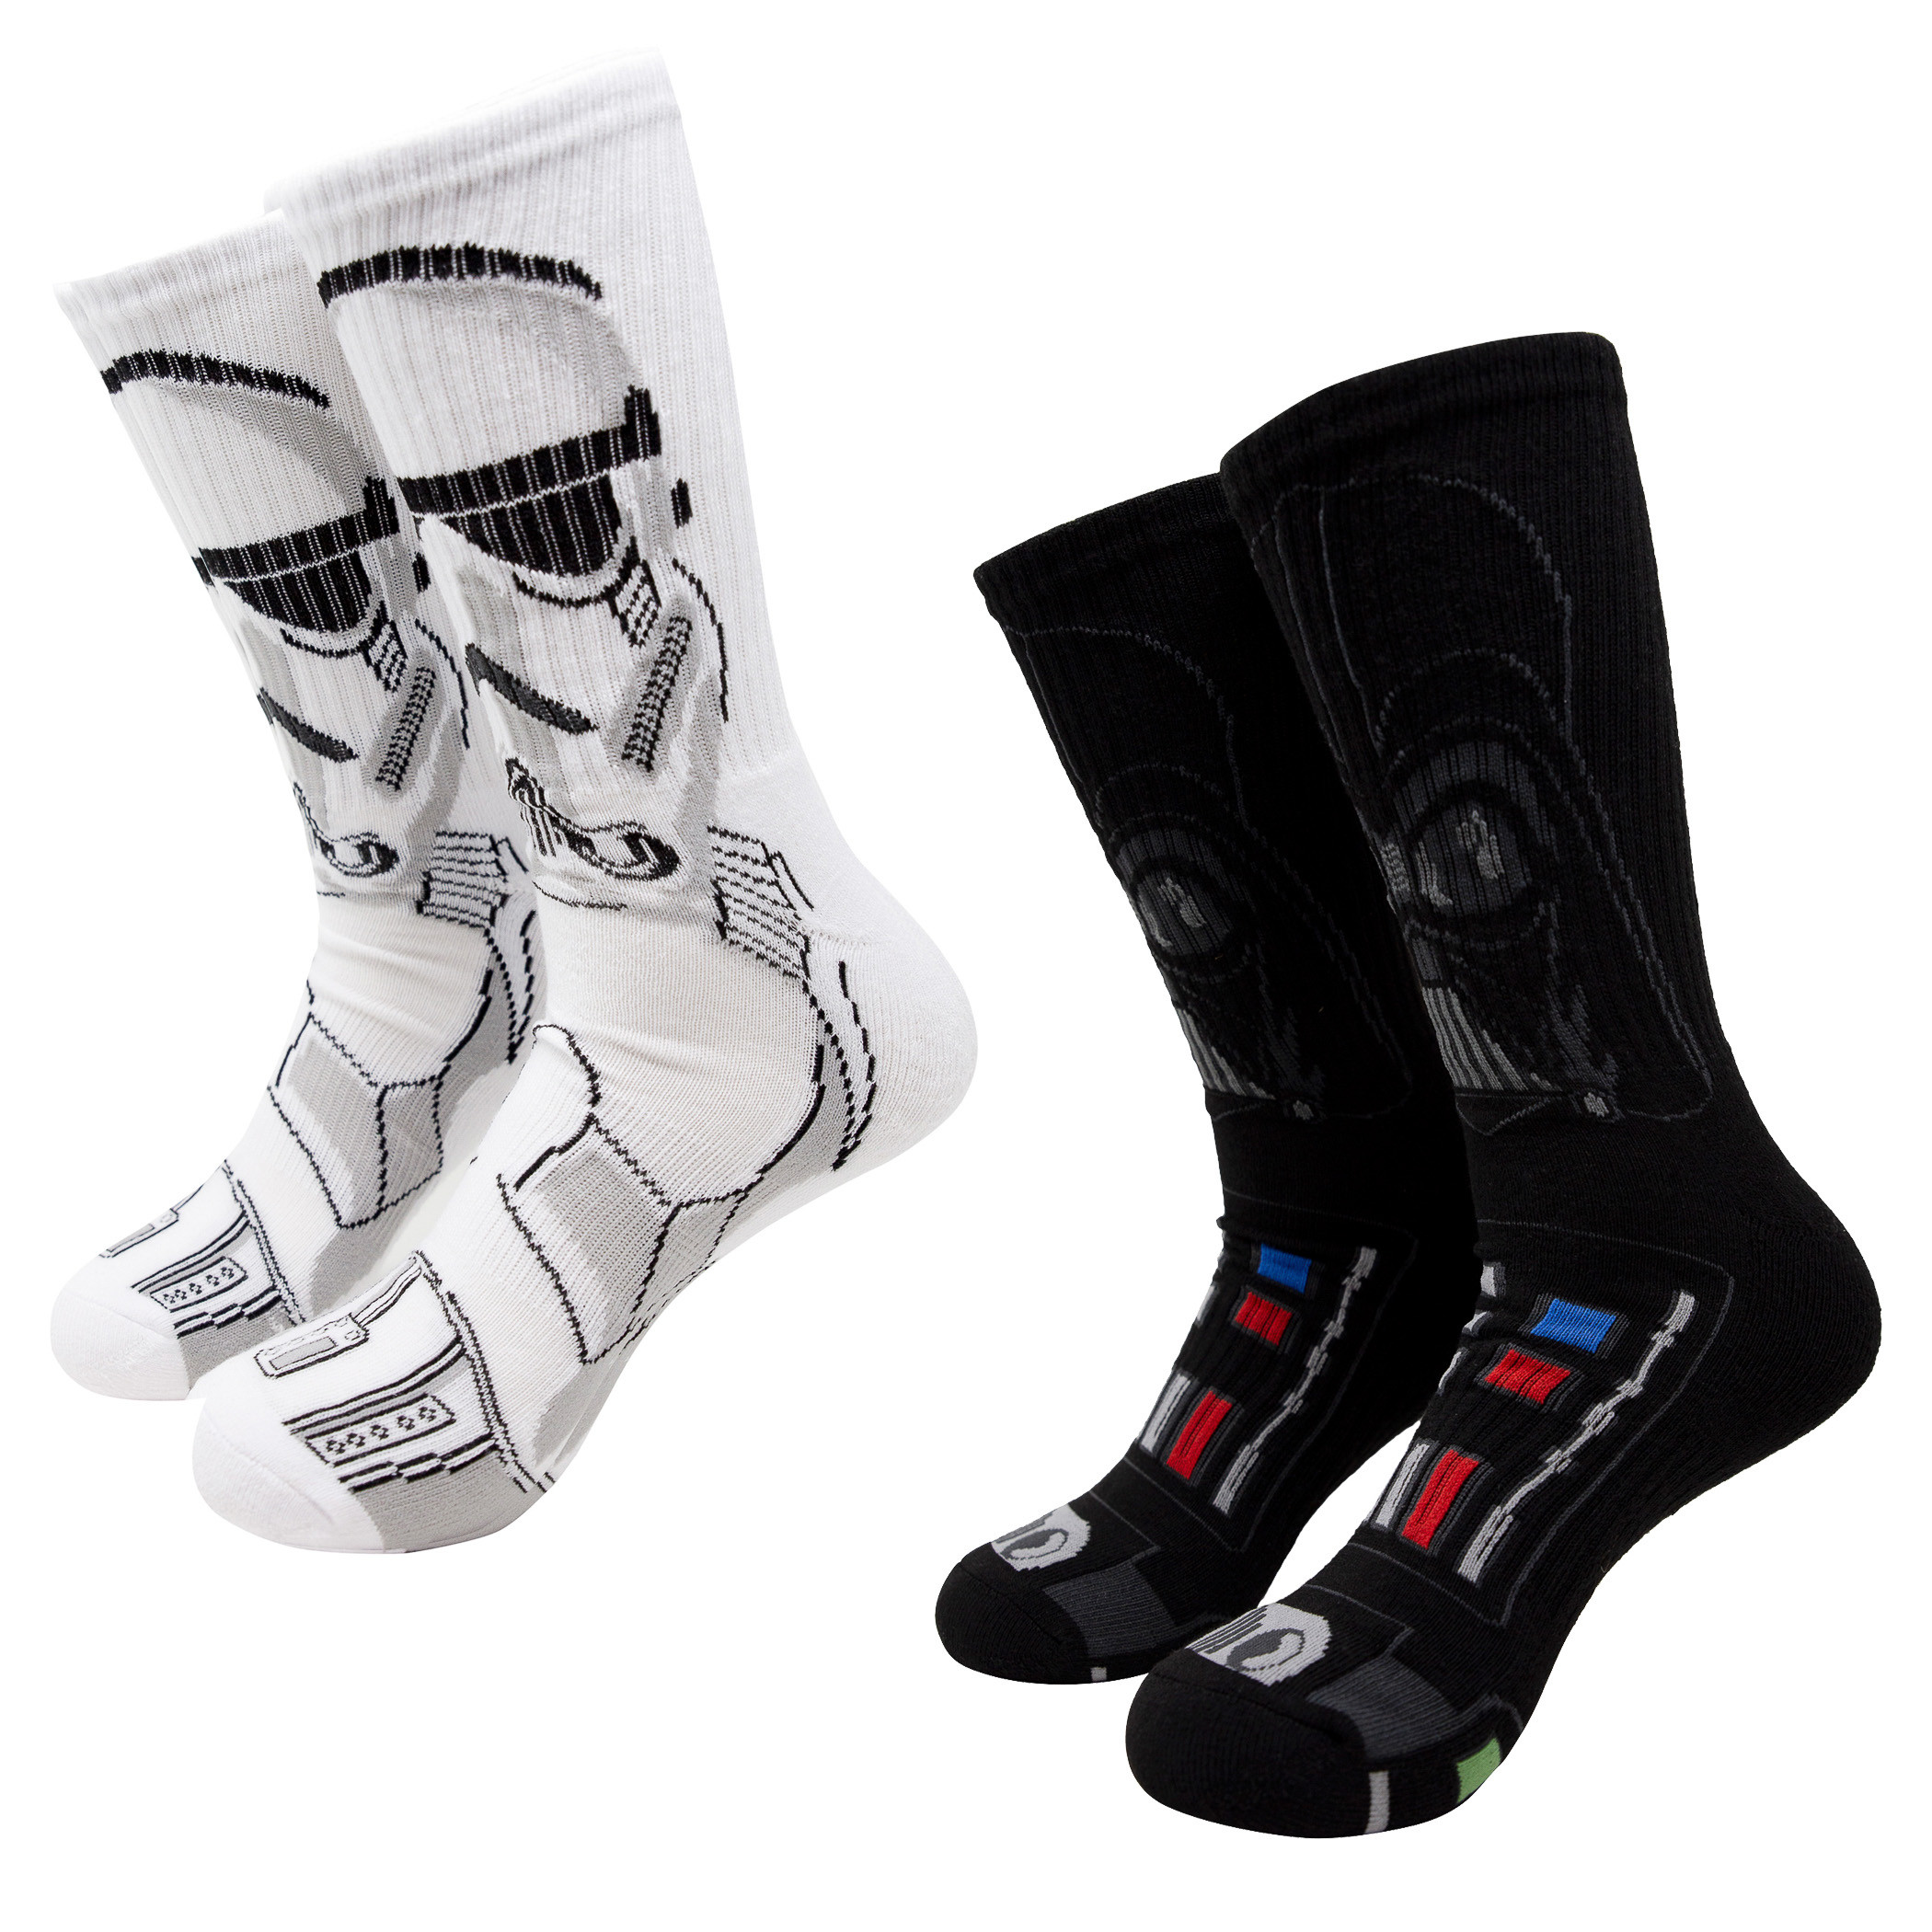 DARTH VADER USE THE FORCE Galactic Empire NWT STAR WARS 2 pr mens crew socks 